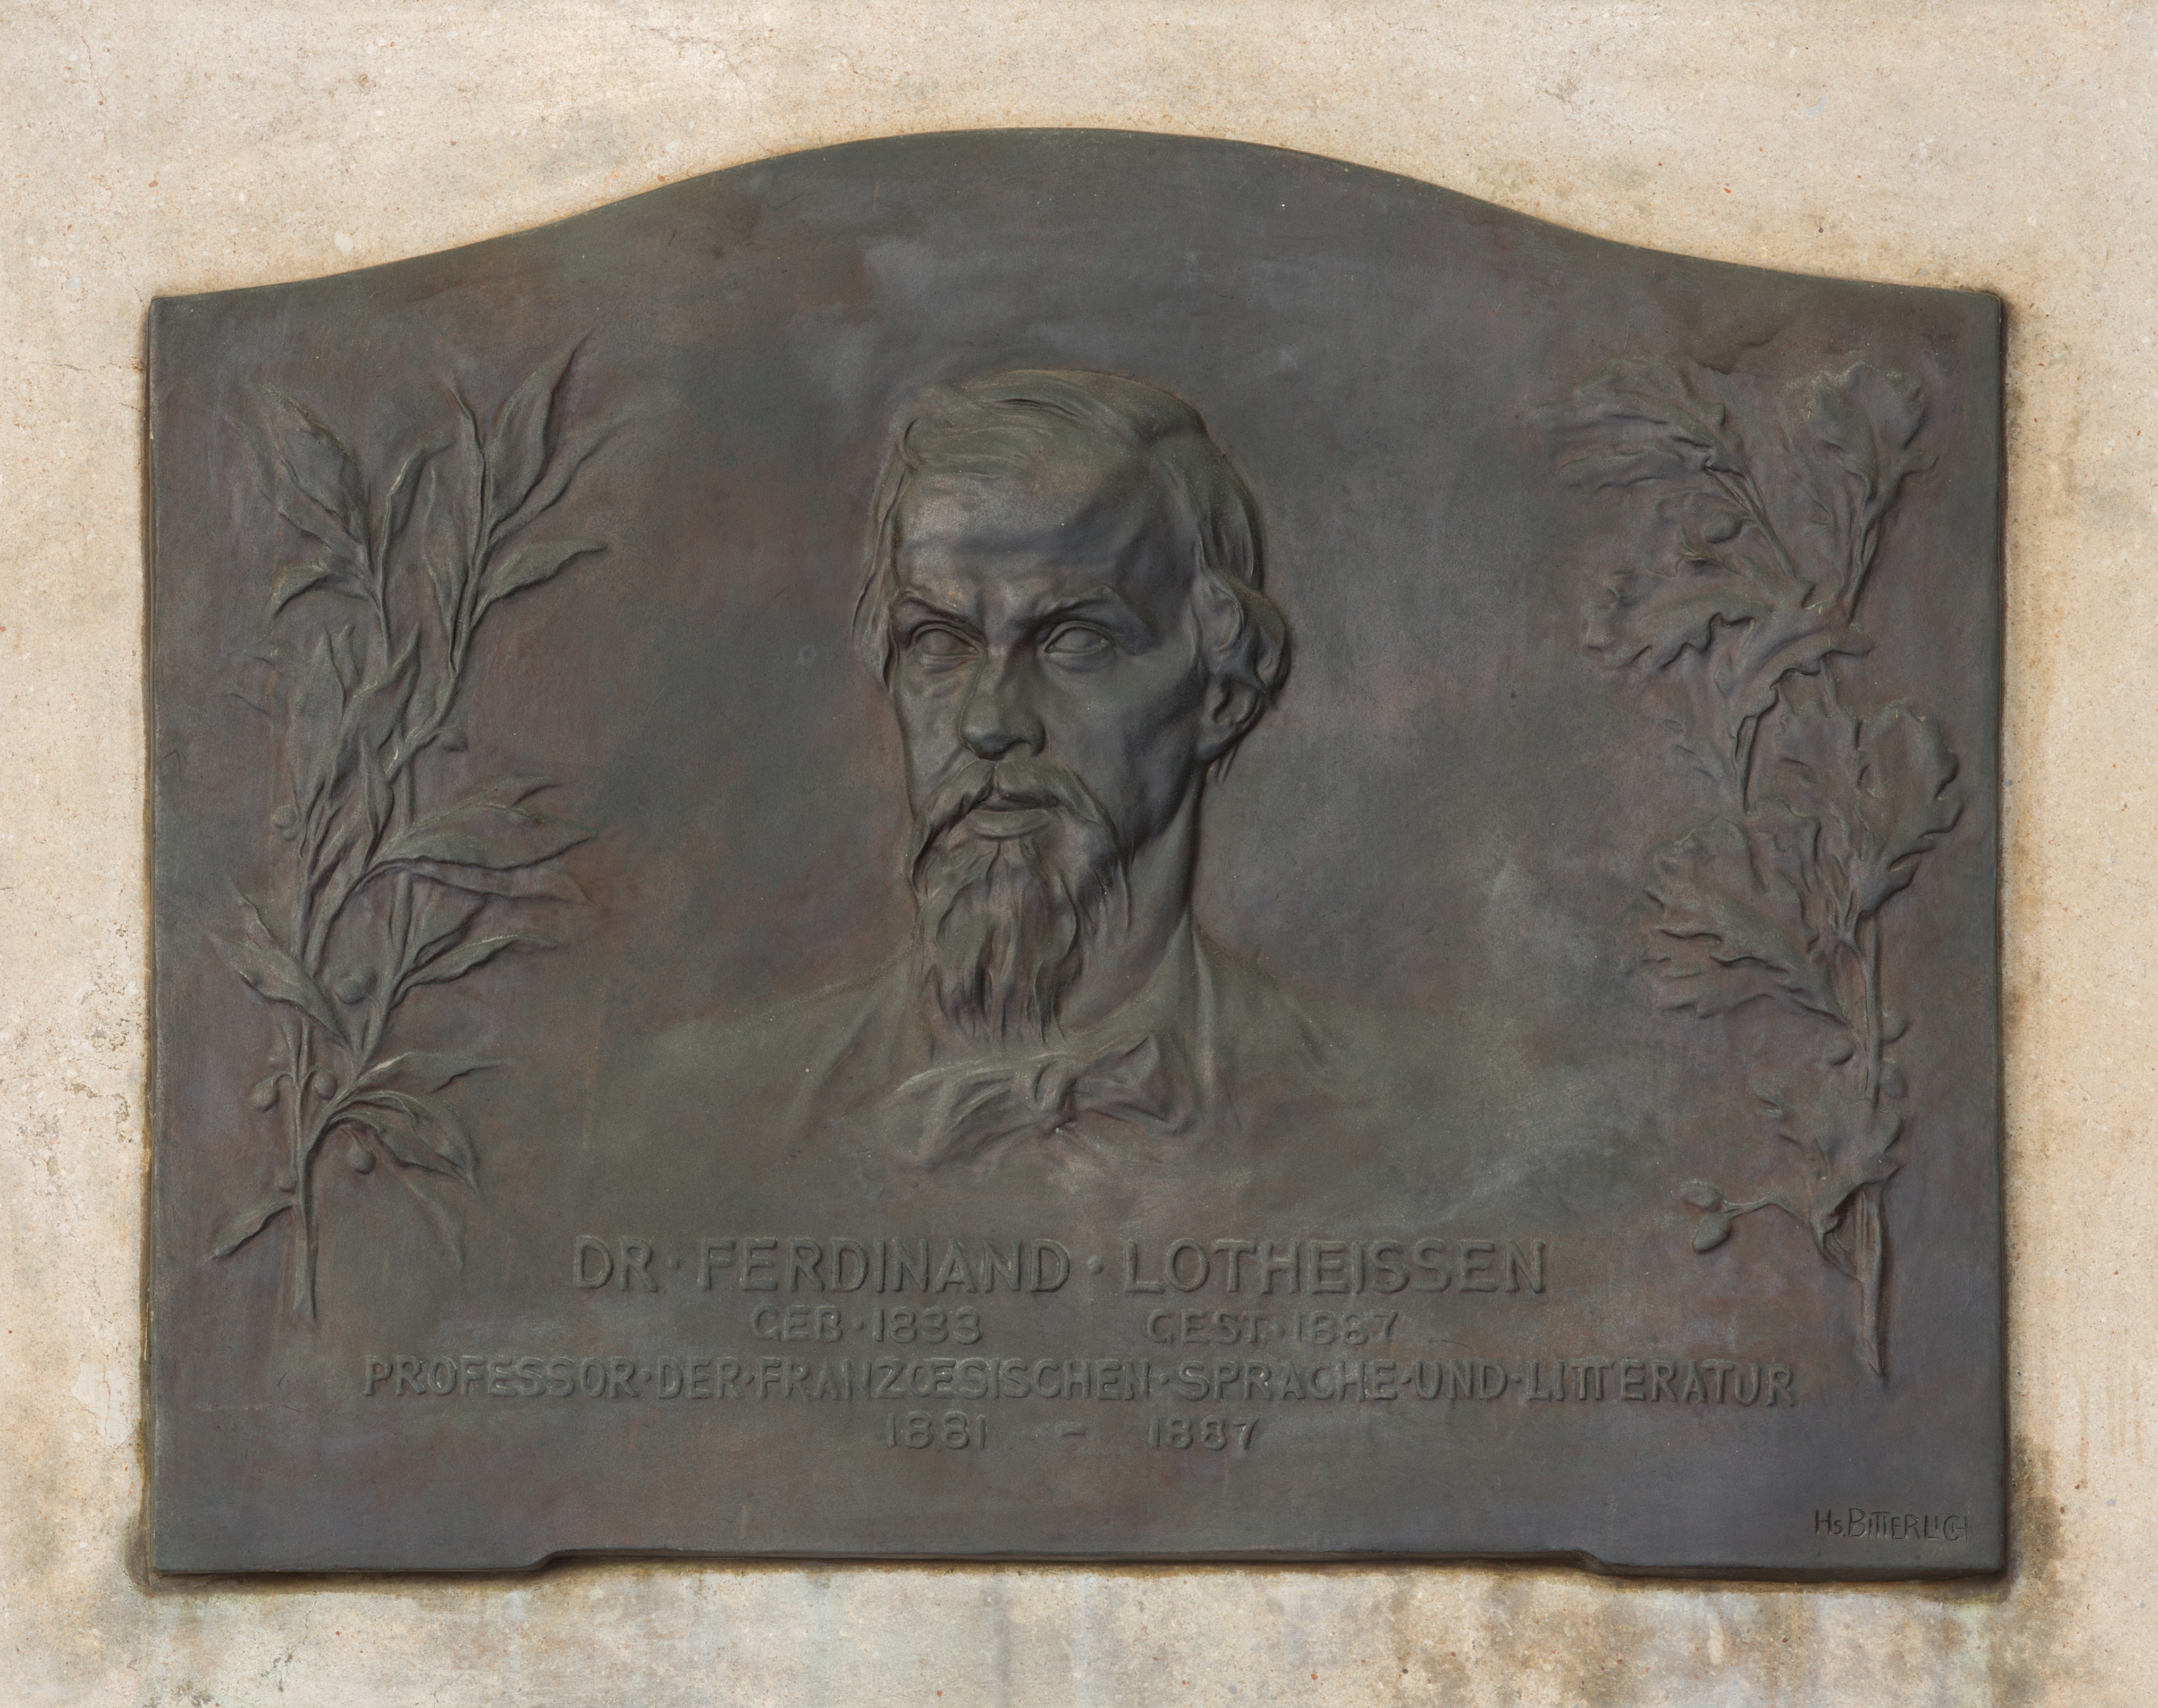 Ferdinand Lotheissen (Nr. 39) Basrelief in the Arkadenhof, University of Vienna - 2162-2145.jpg